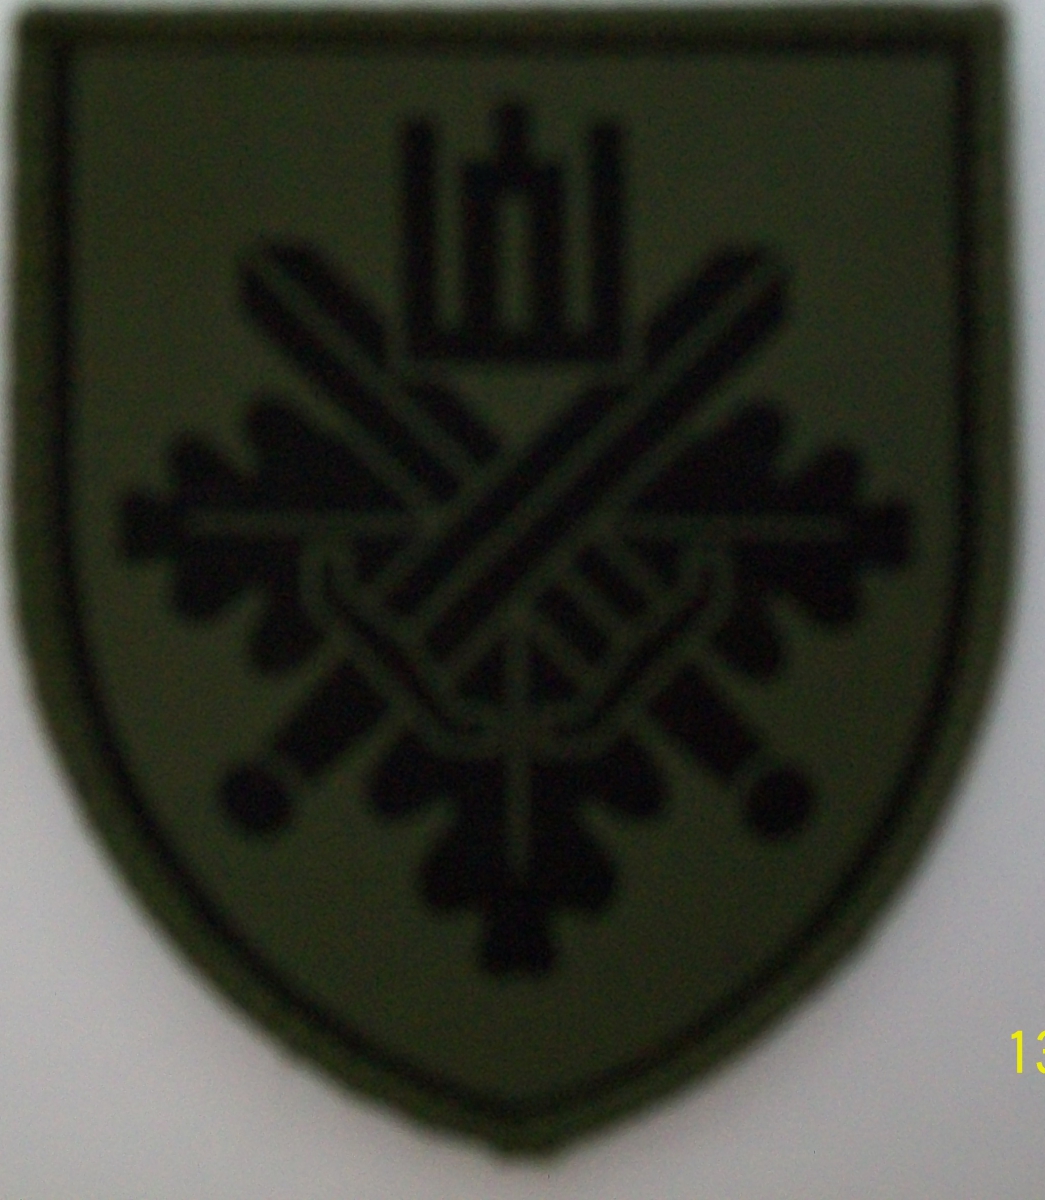 Добровольные силы охраны края с 2012 года